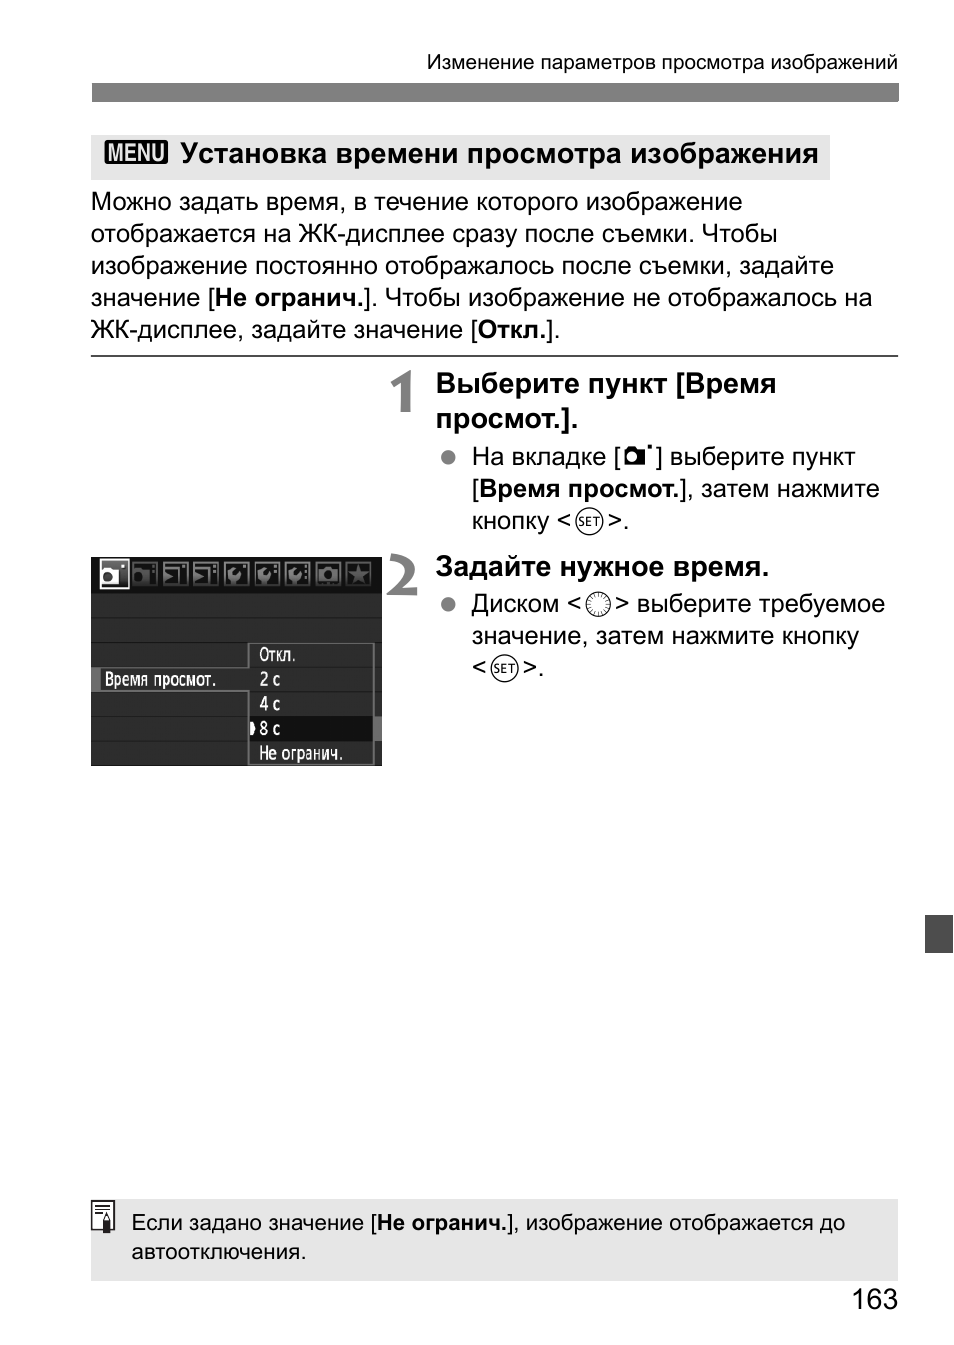 Инструкция по эксплуатации Canon EOS-1Ds Mark II | Страница 163 / 252